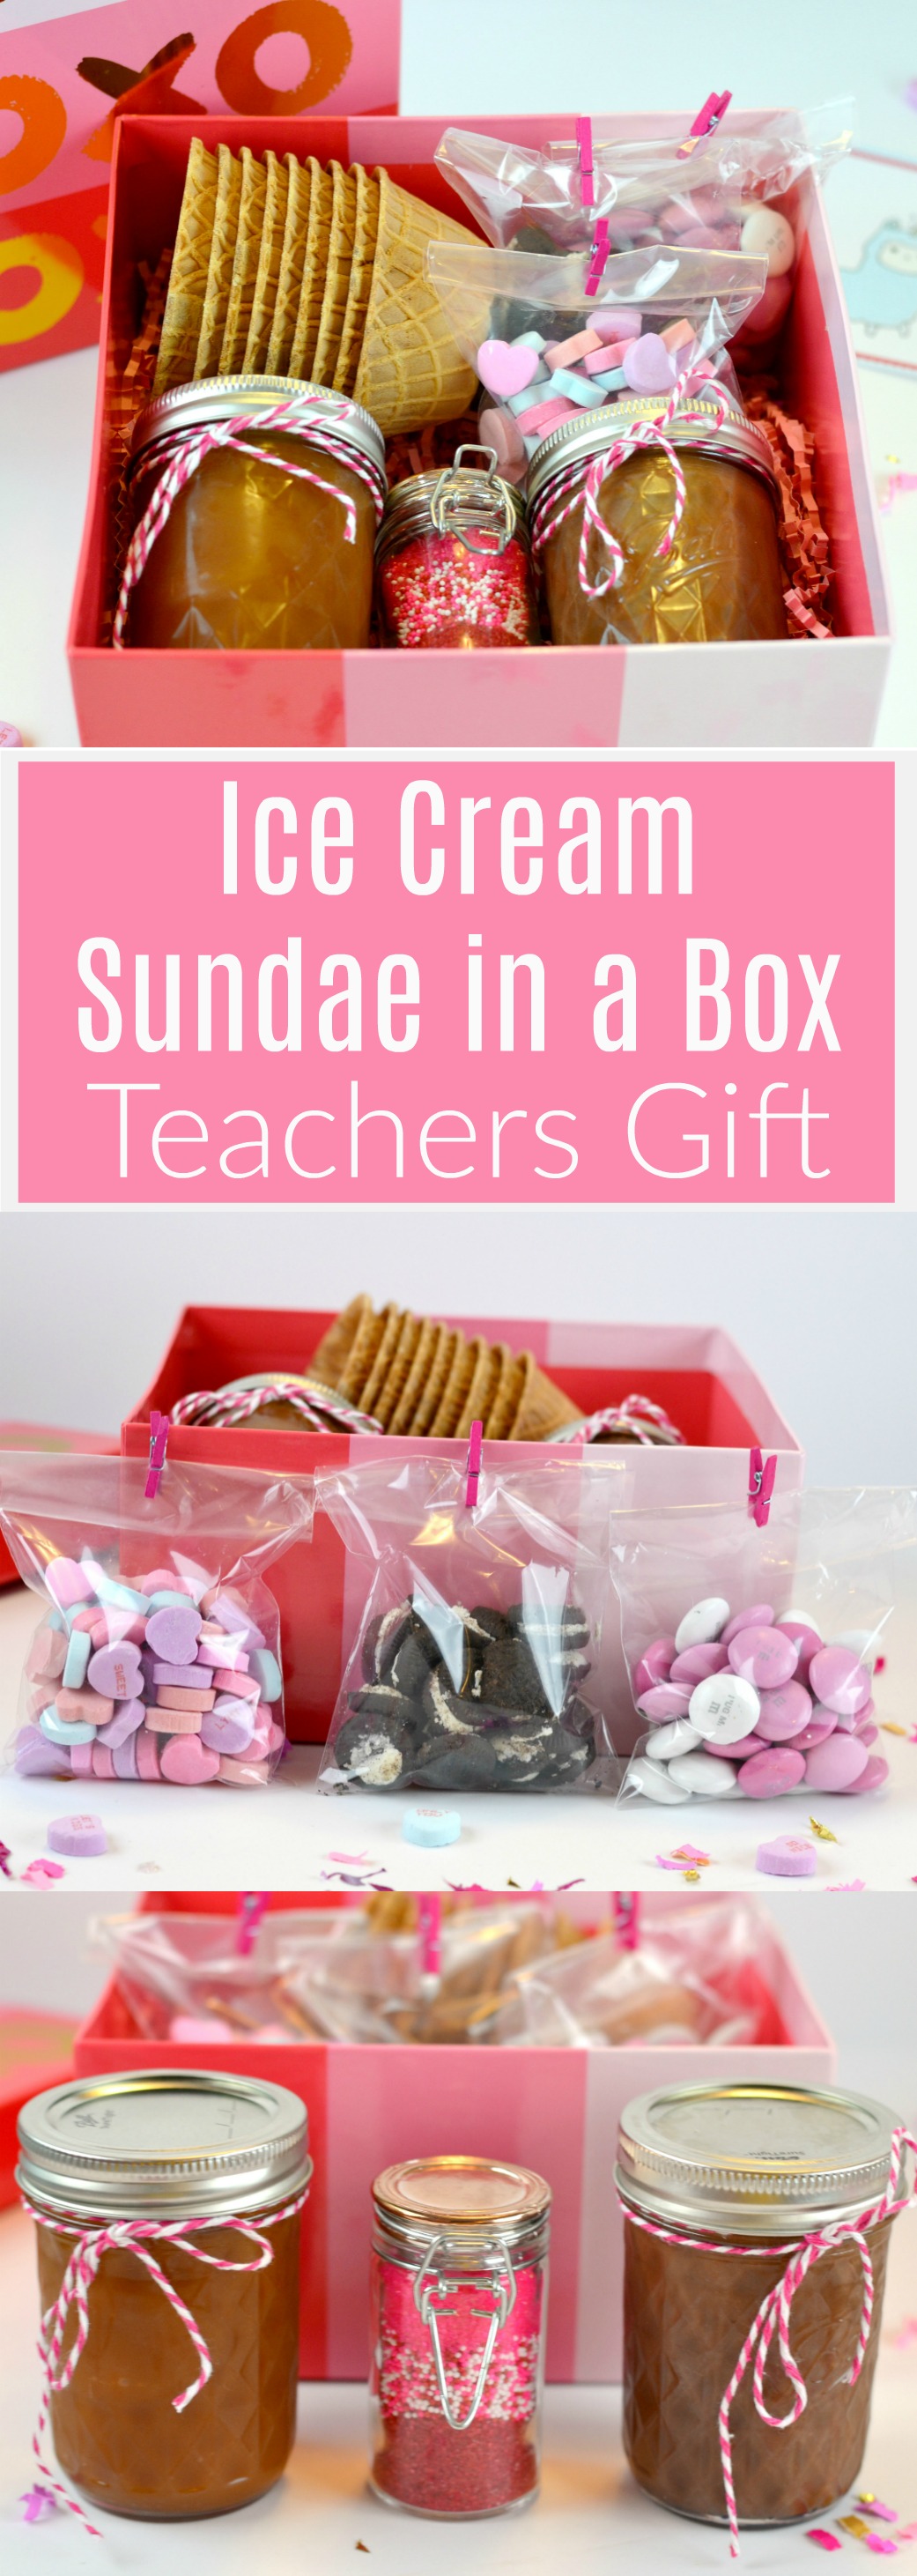 Ice Cream Sundae in a Box Teachers Gift